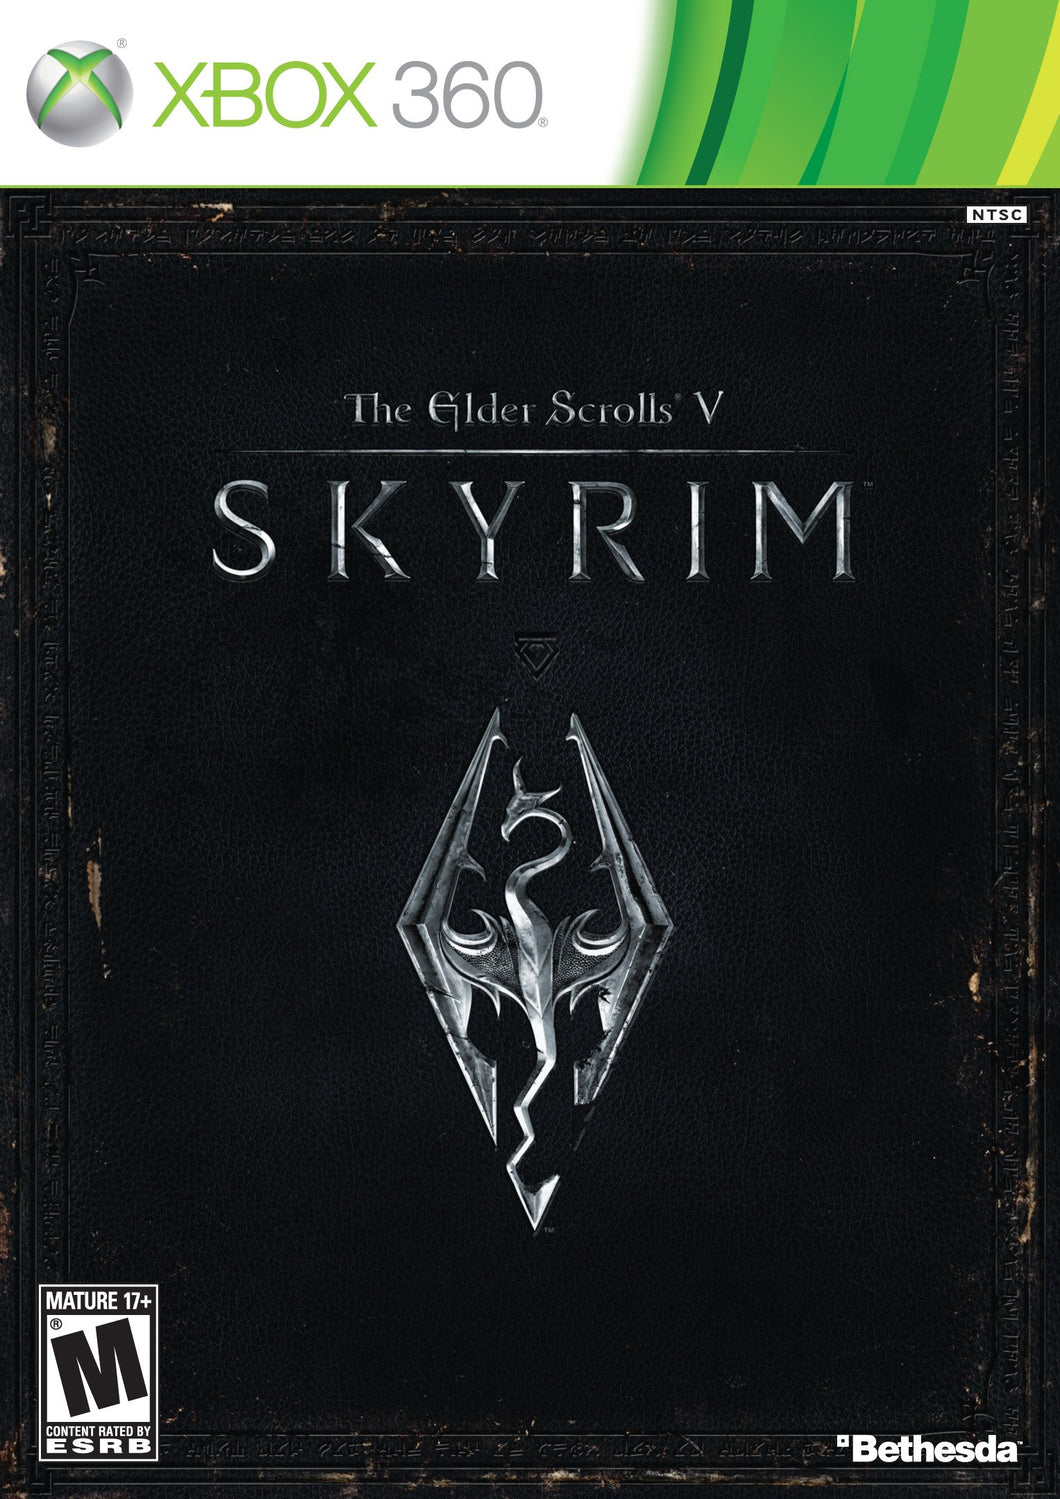 The Elder Scrolls: Skyrim X360